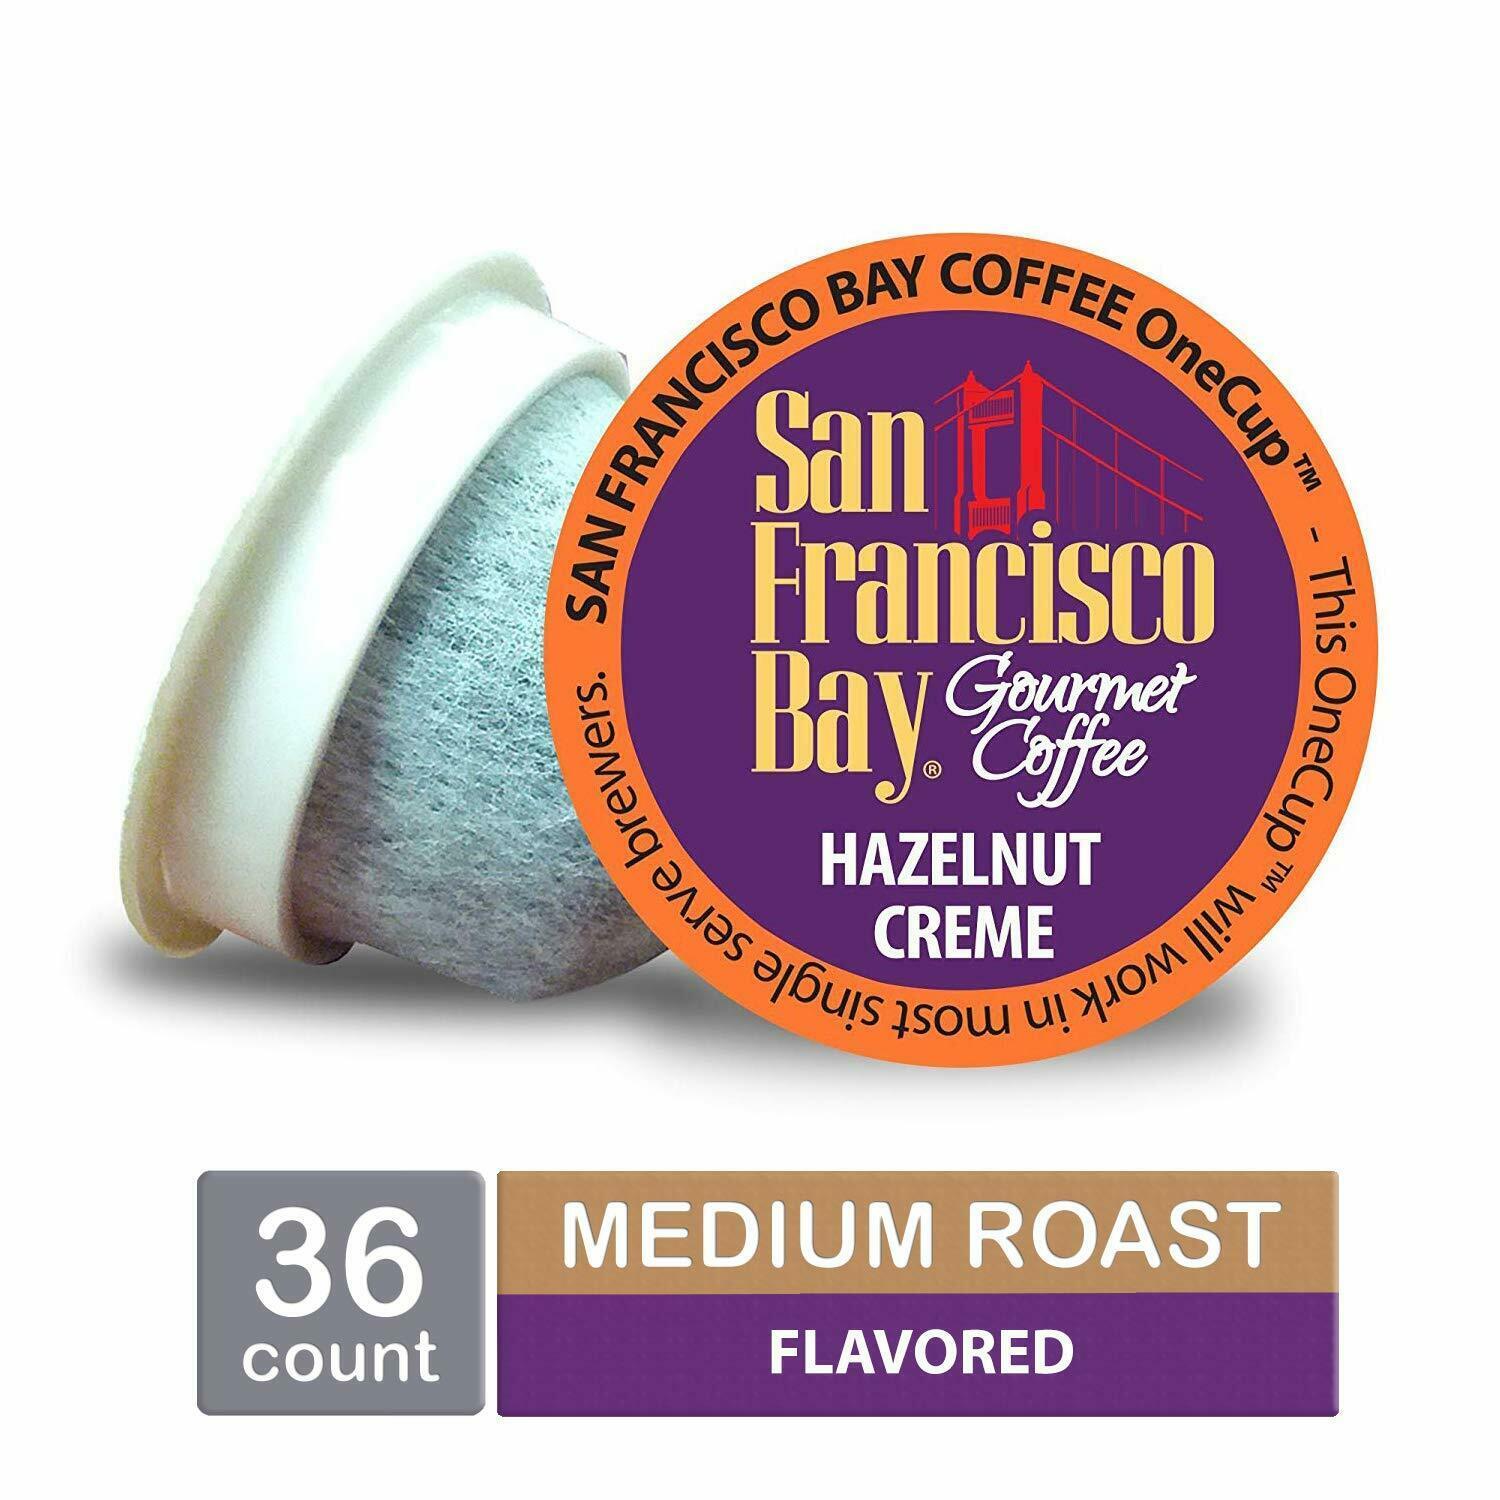 San Francisco Bay OneCup Hazelnut Creme Coffee 36 to 180 Keurig K cup Pick Size - $34.89 - $134.99